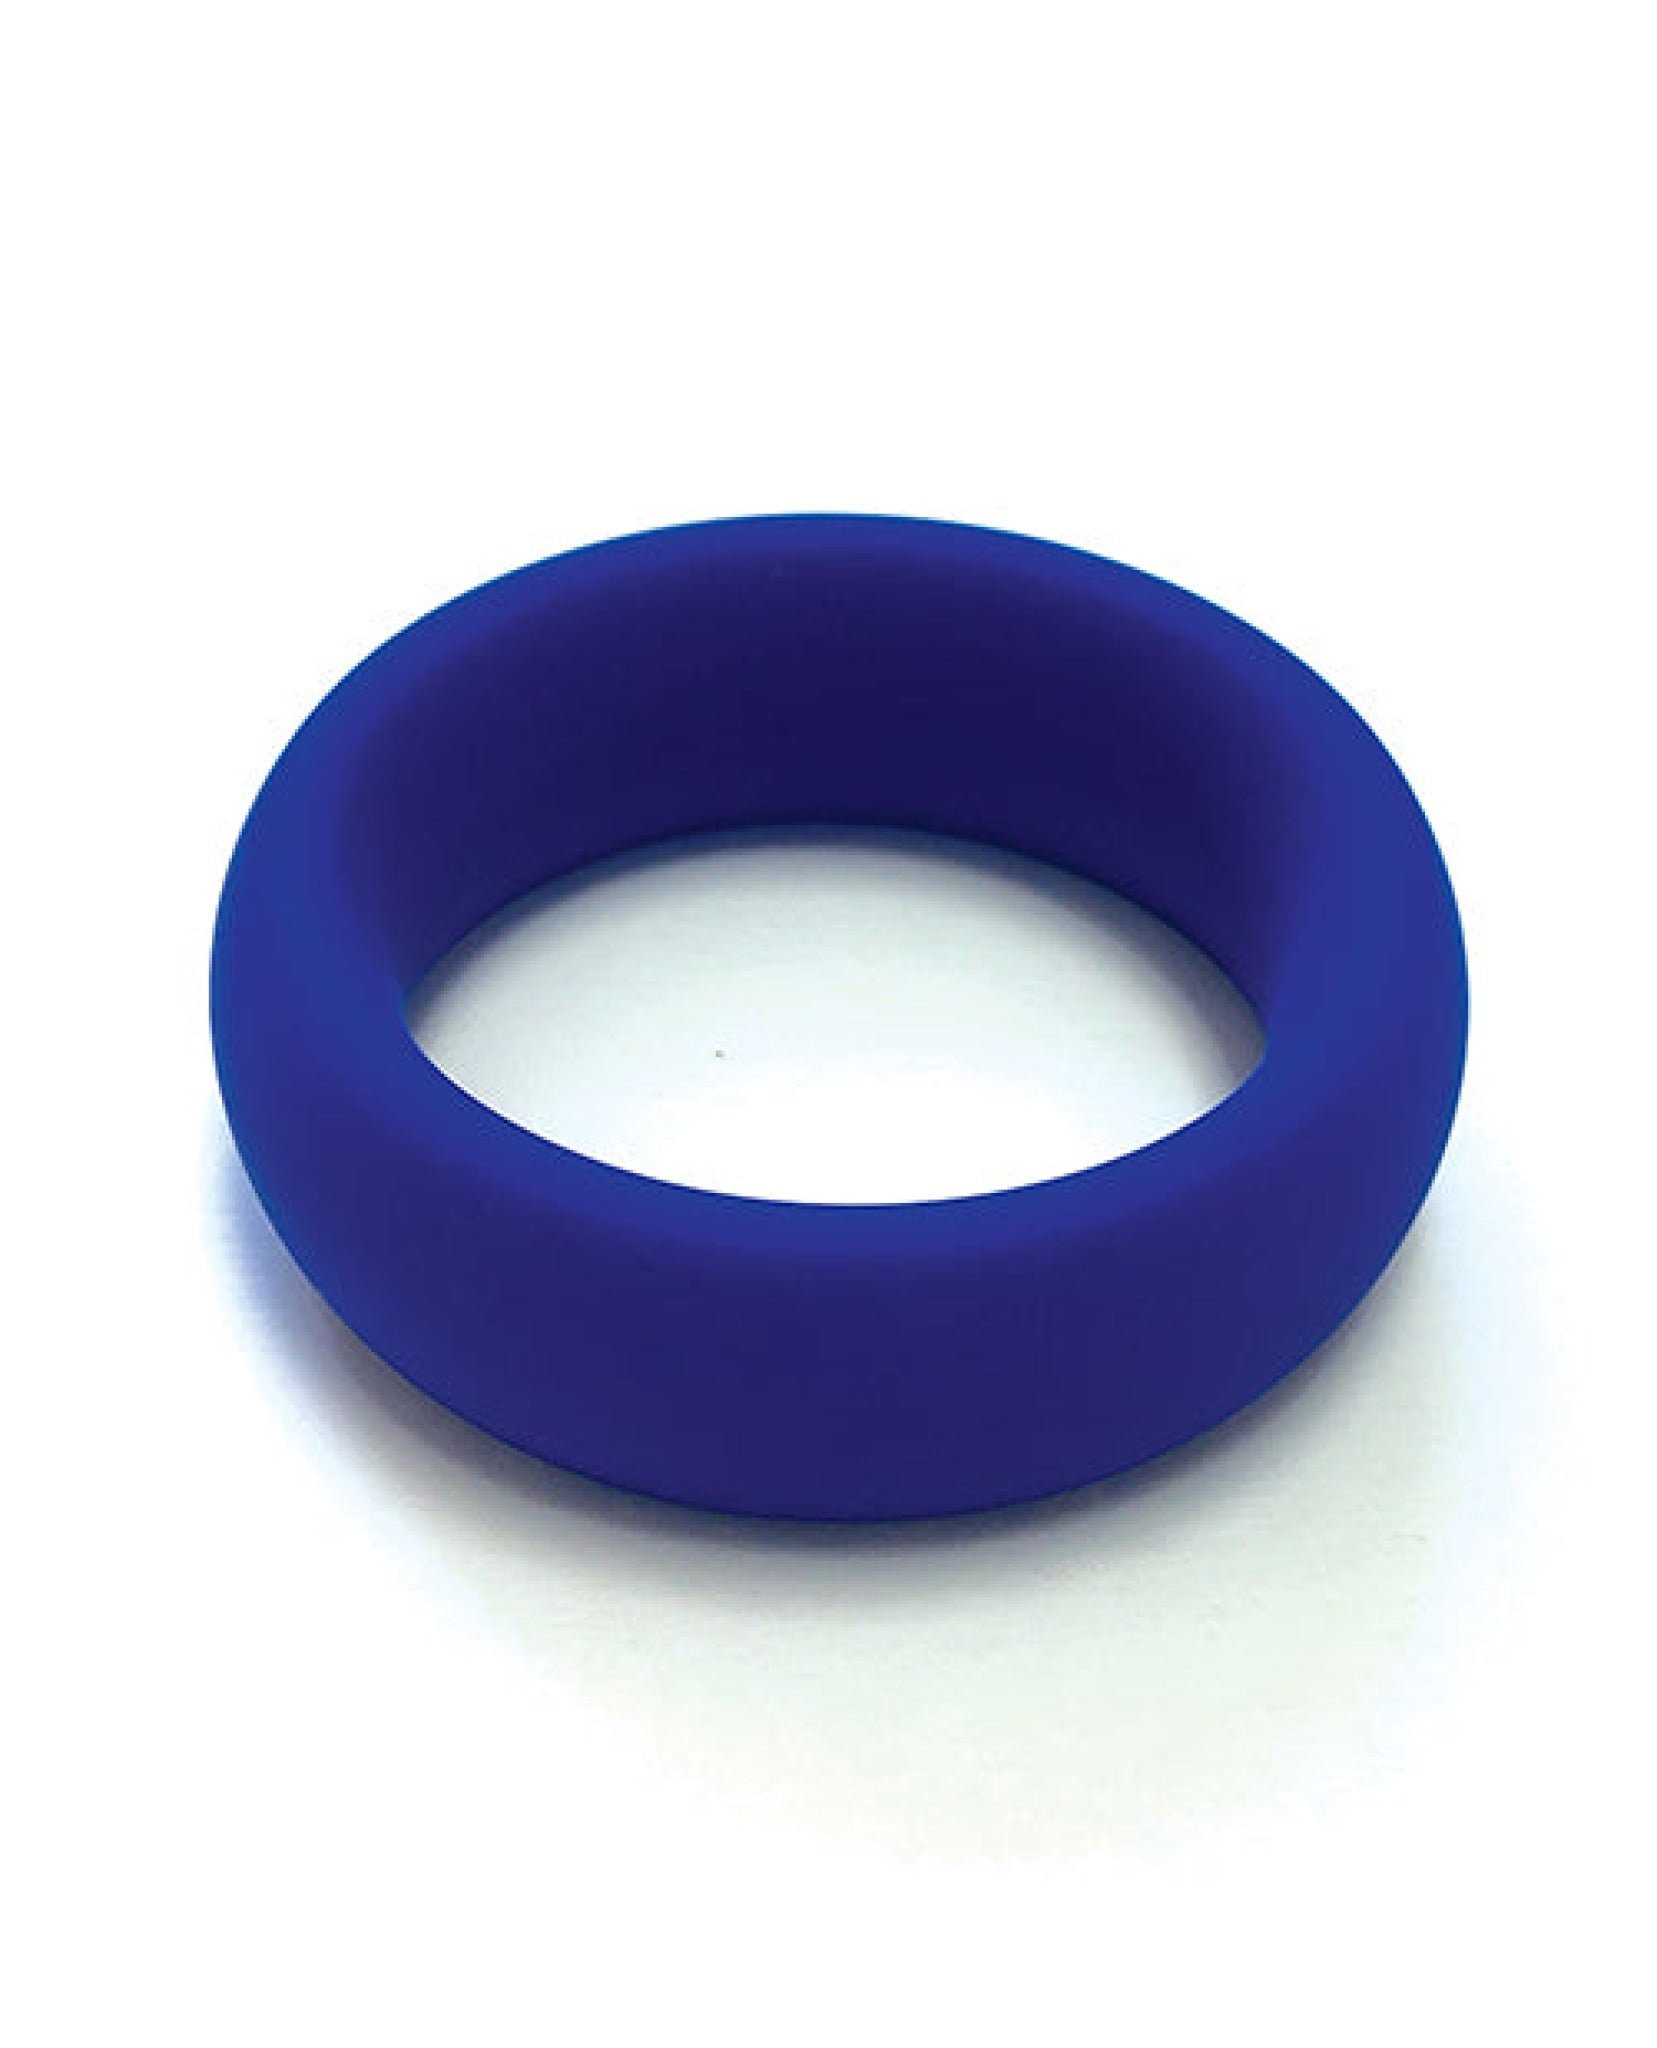 Spartacus 1.5" Wide Silicone Donut Ring - Blue Spartacus